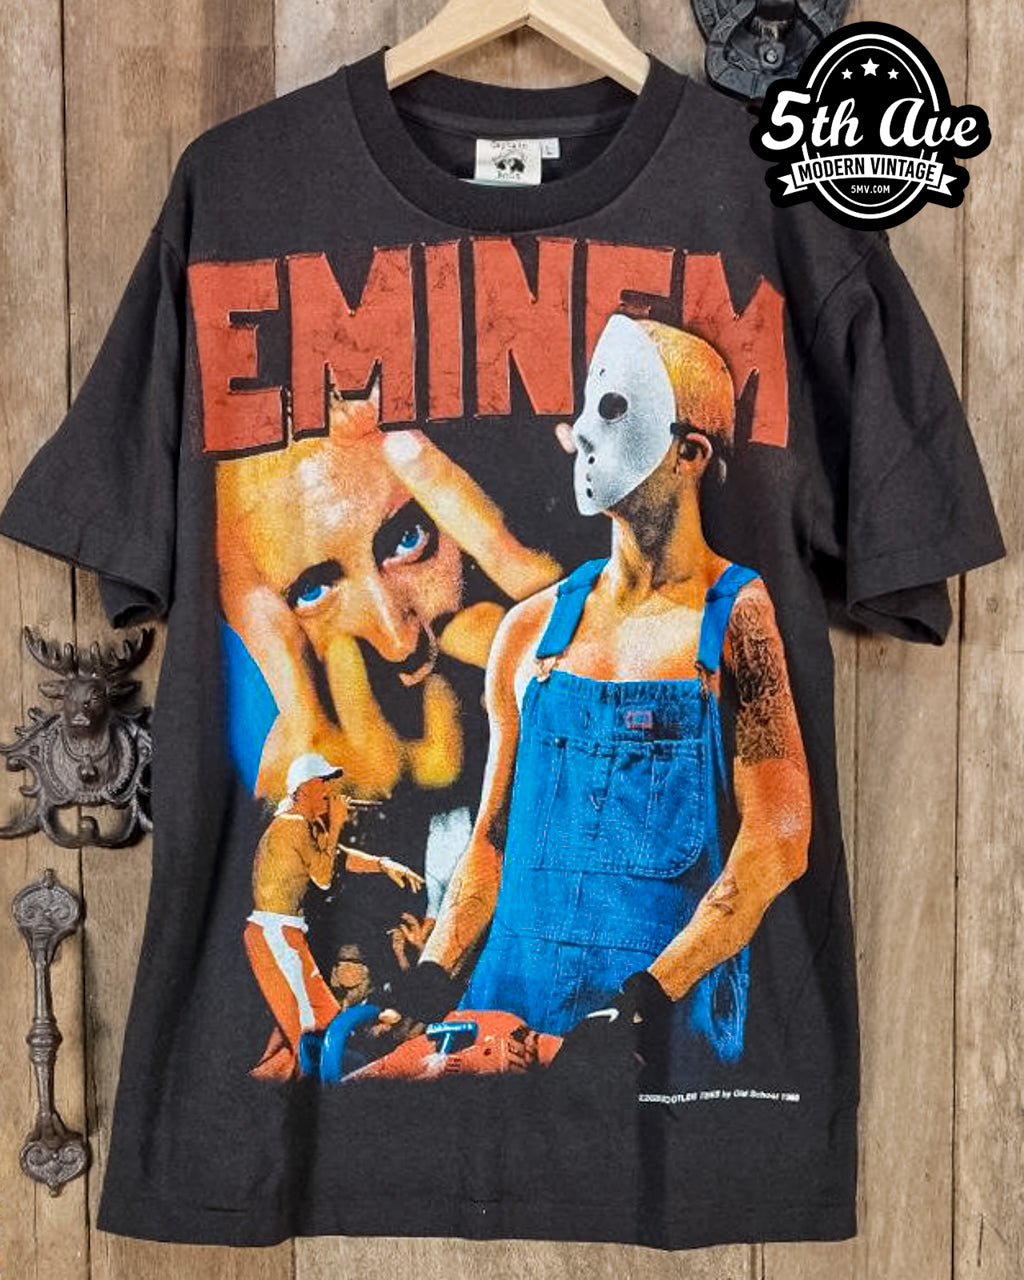 Eminem Jason Mask "EMINƎM" - New Vintage Band T shirt